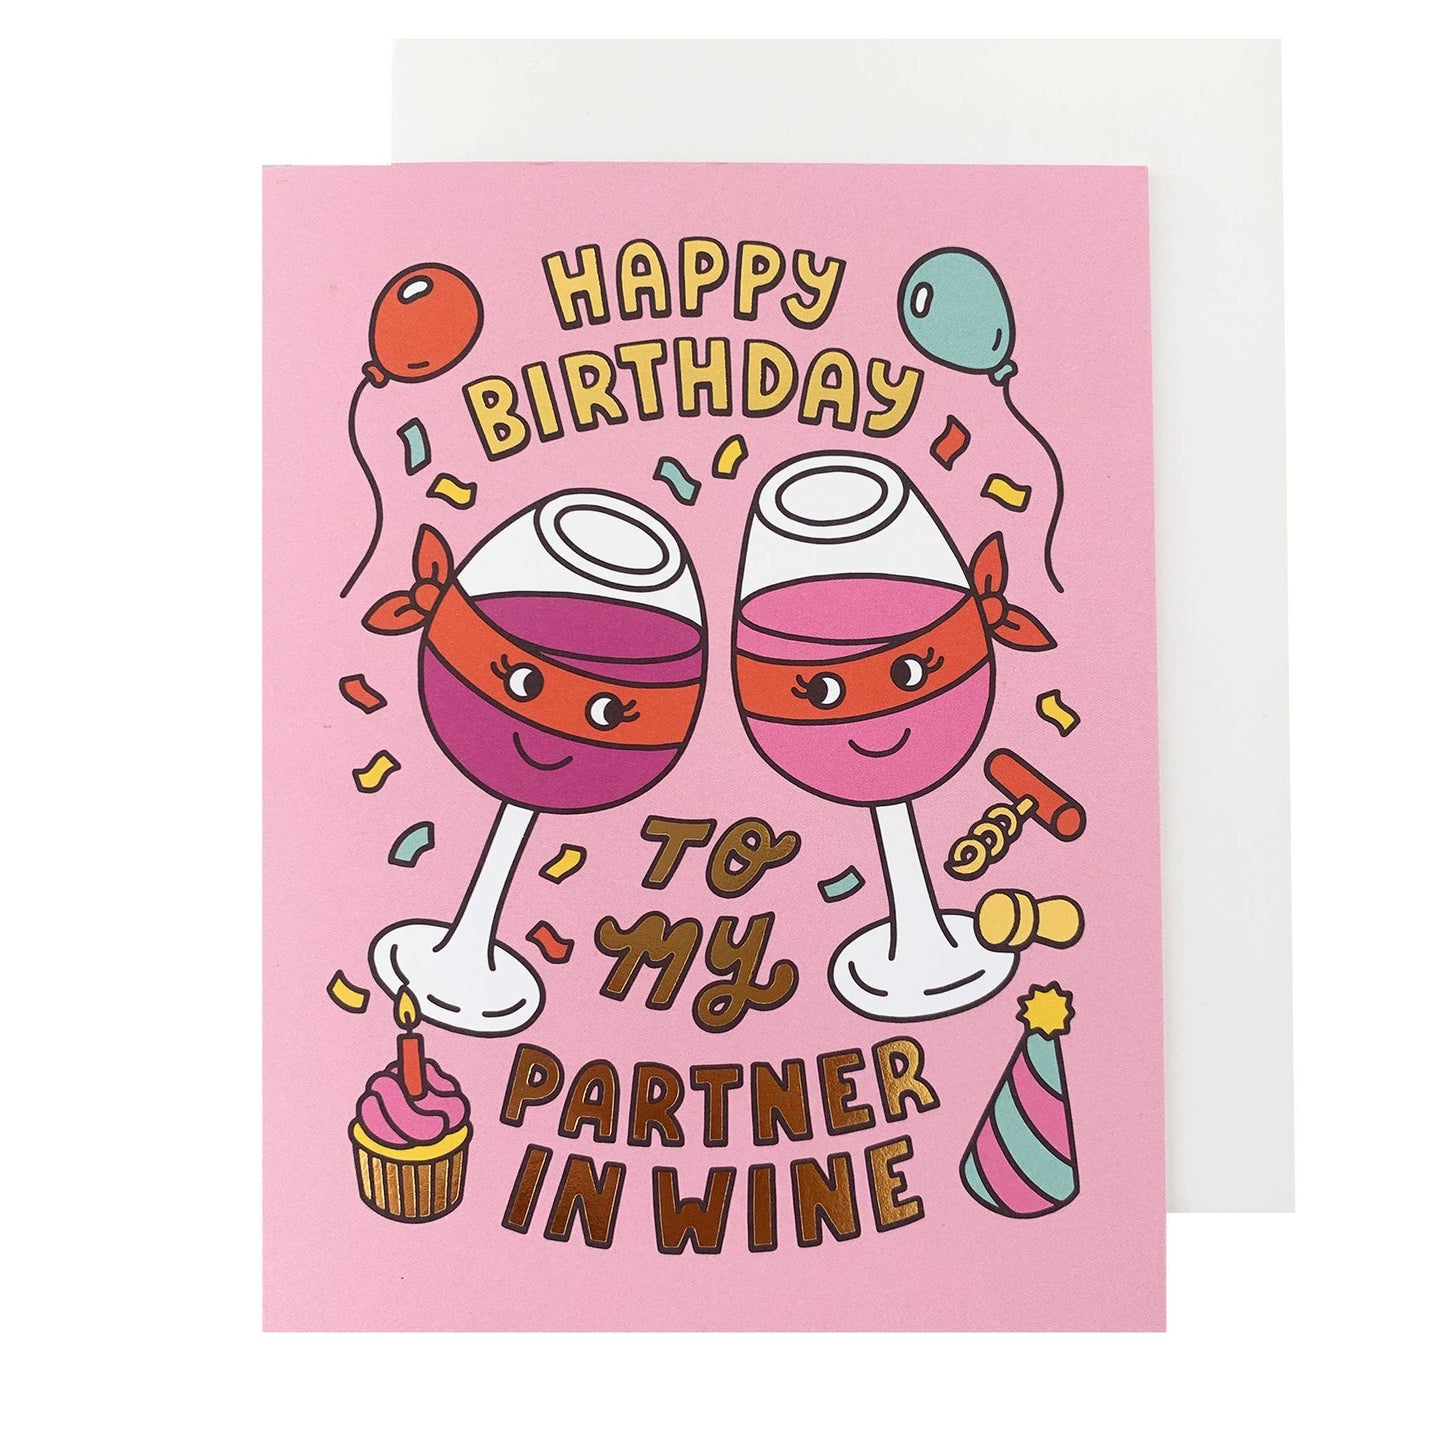 The Social Type Partner in Wine Birthday Card